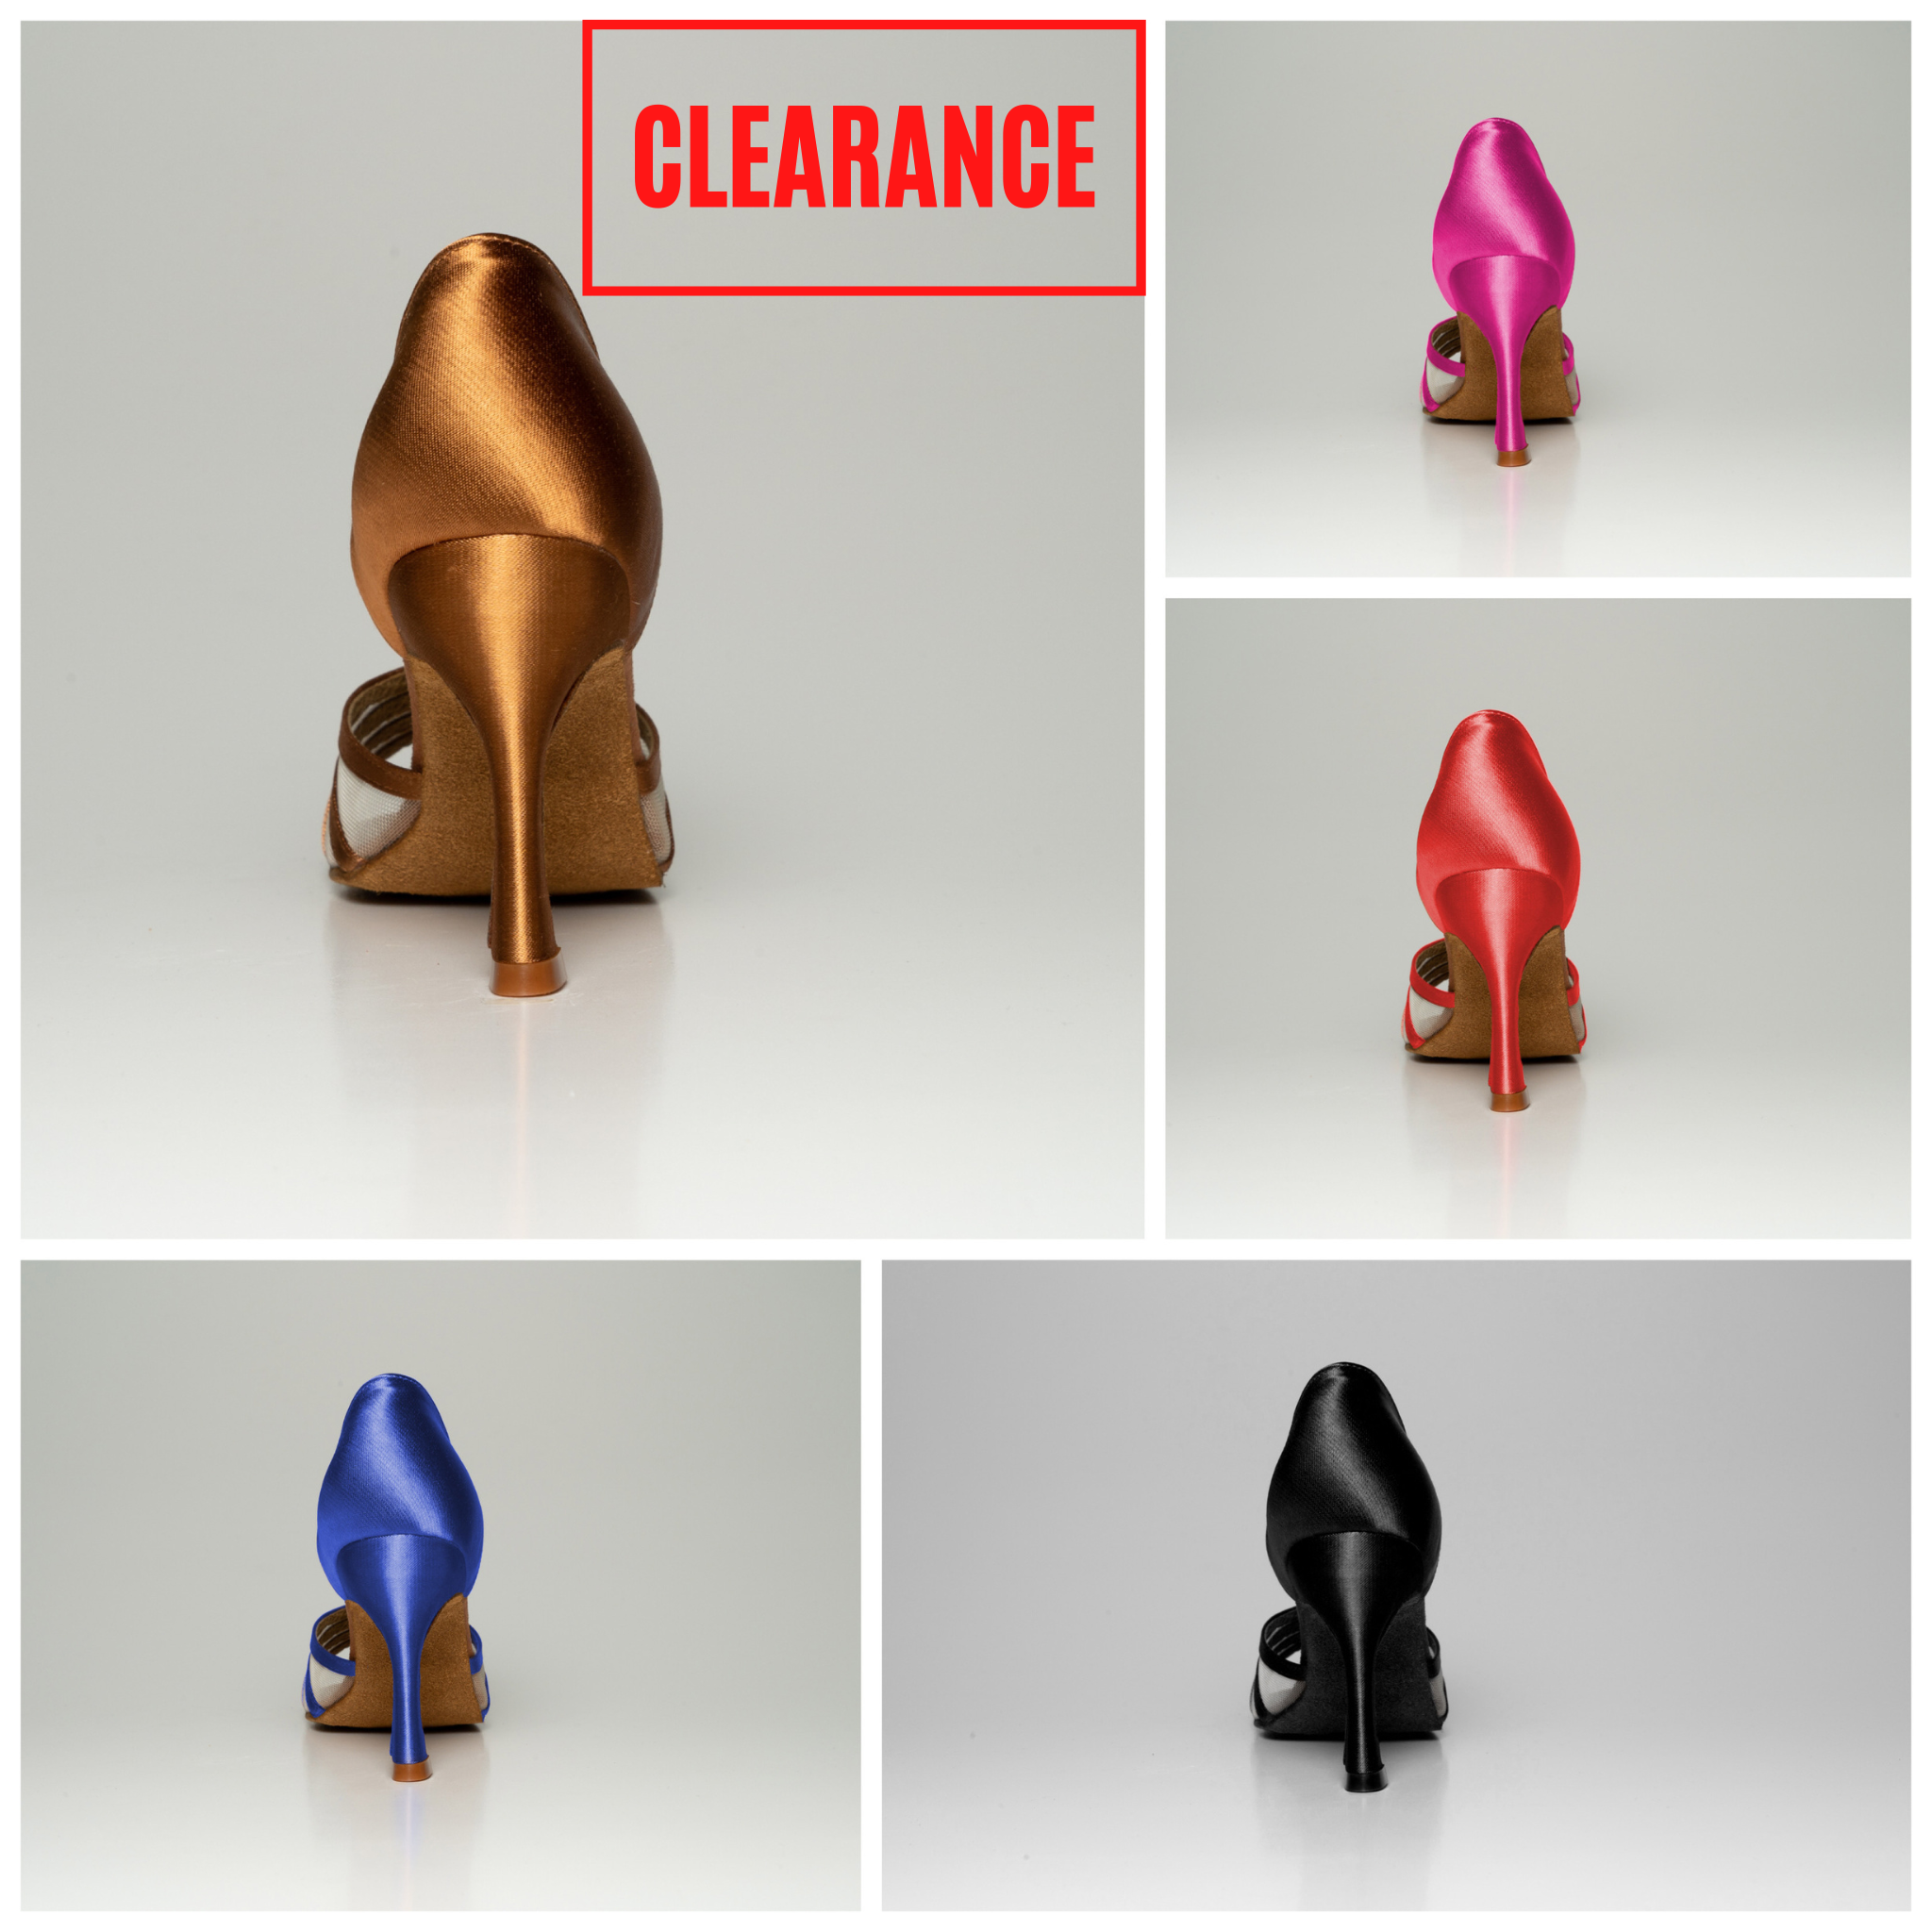 CHGBMOK Clearance Heels for Women Open-Toed Snake Print Roman Shoes Fish  Mouth Side Hollow High Heels - Walmart.com